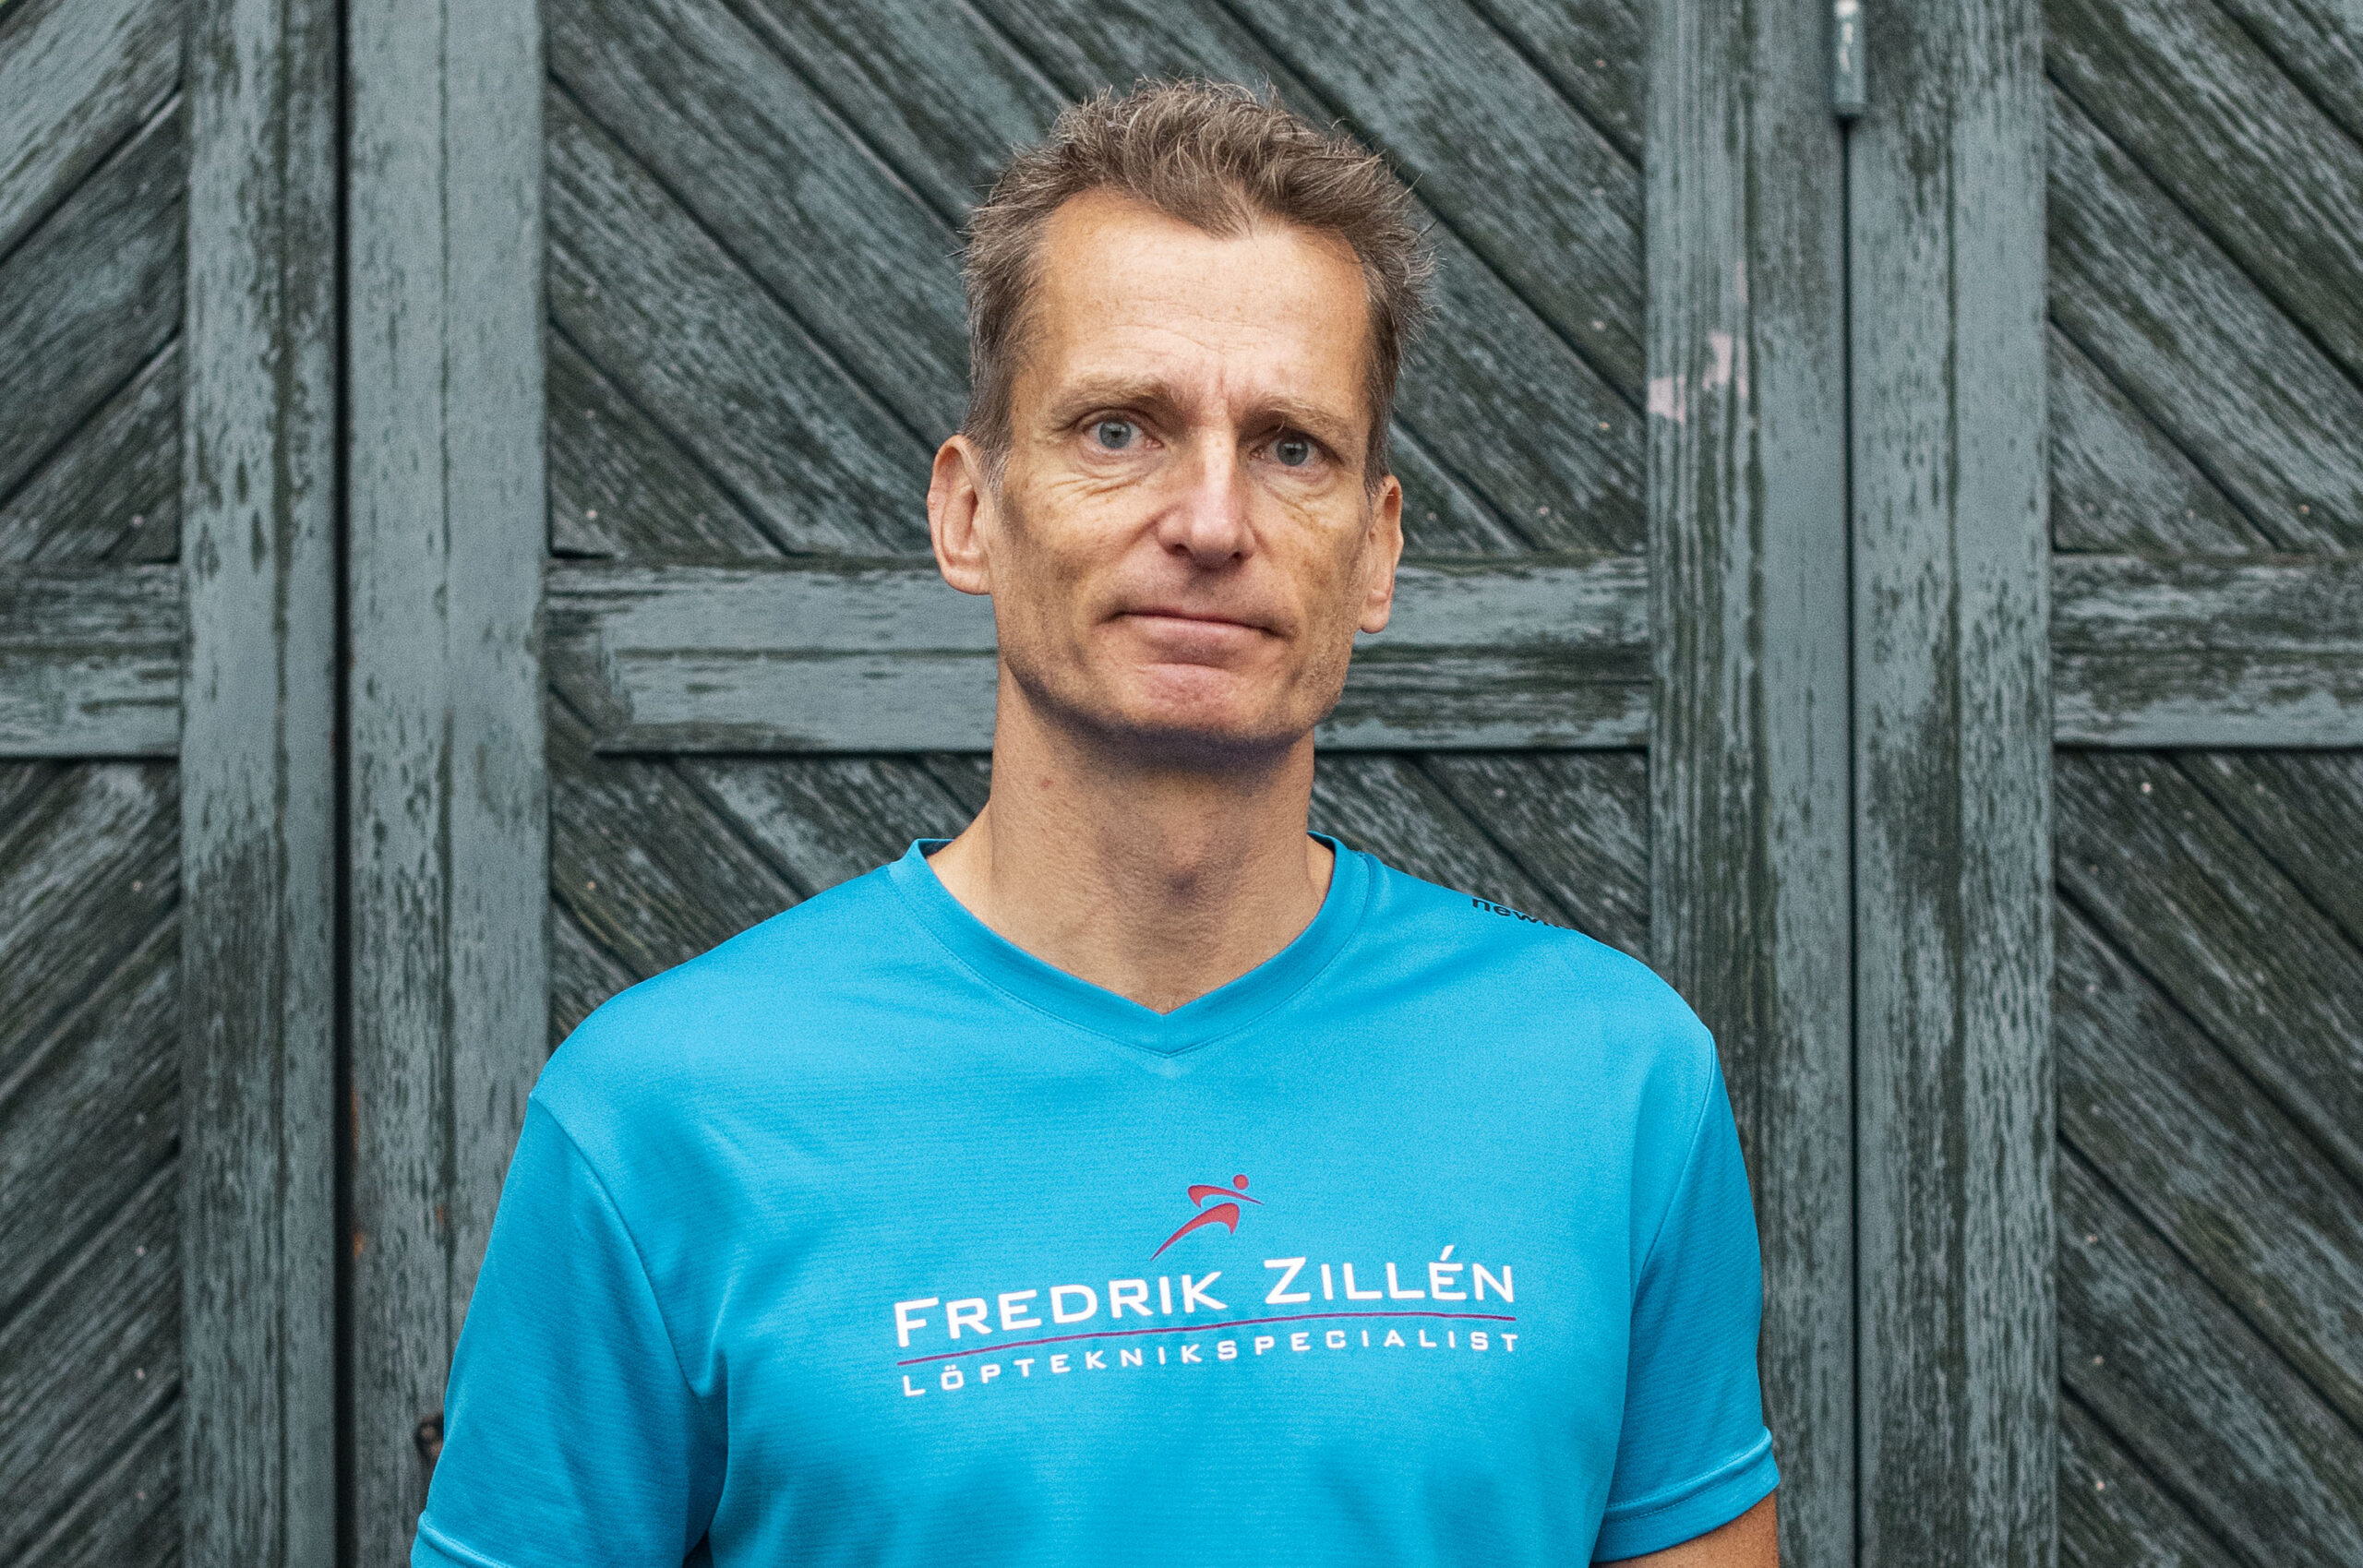 Fredrik Zillén